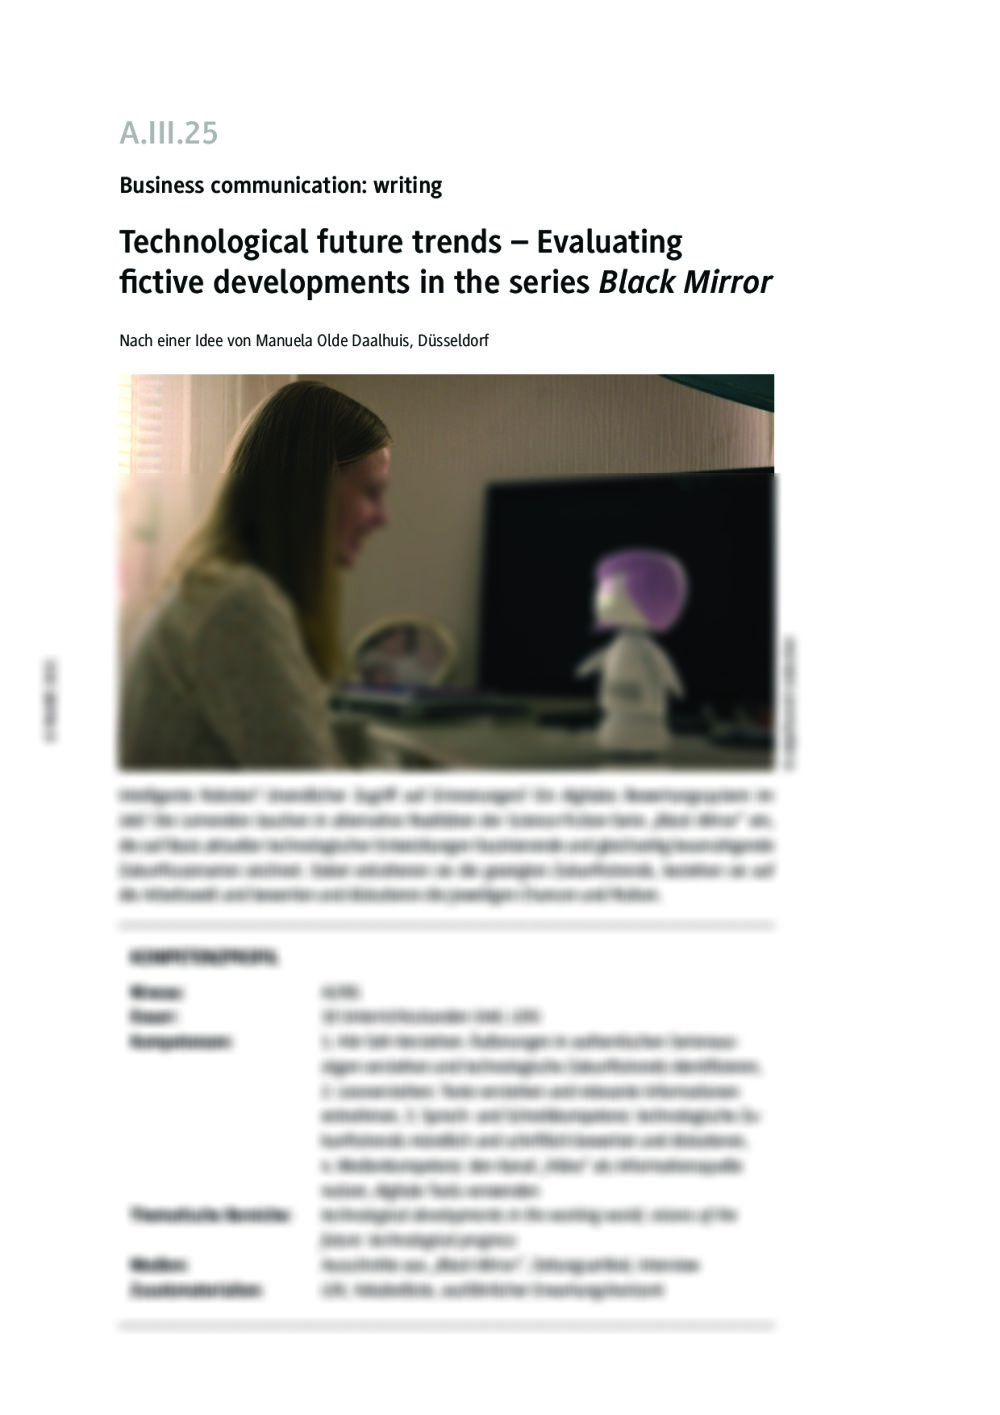 Technological future trends - Seite 1